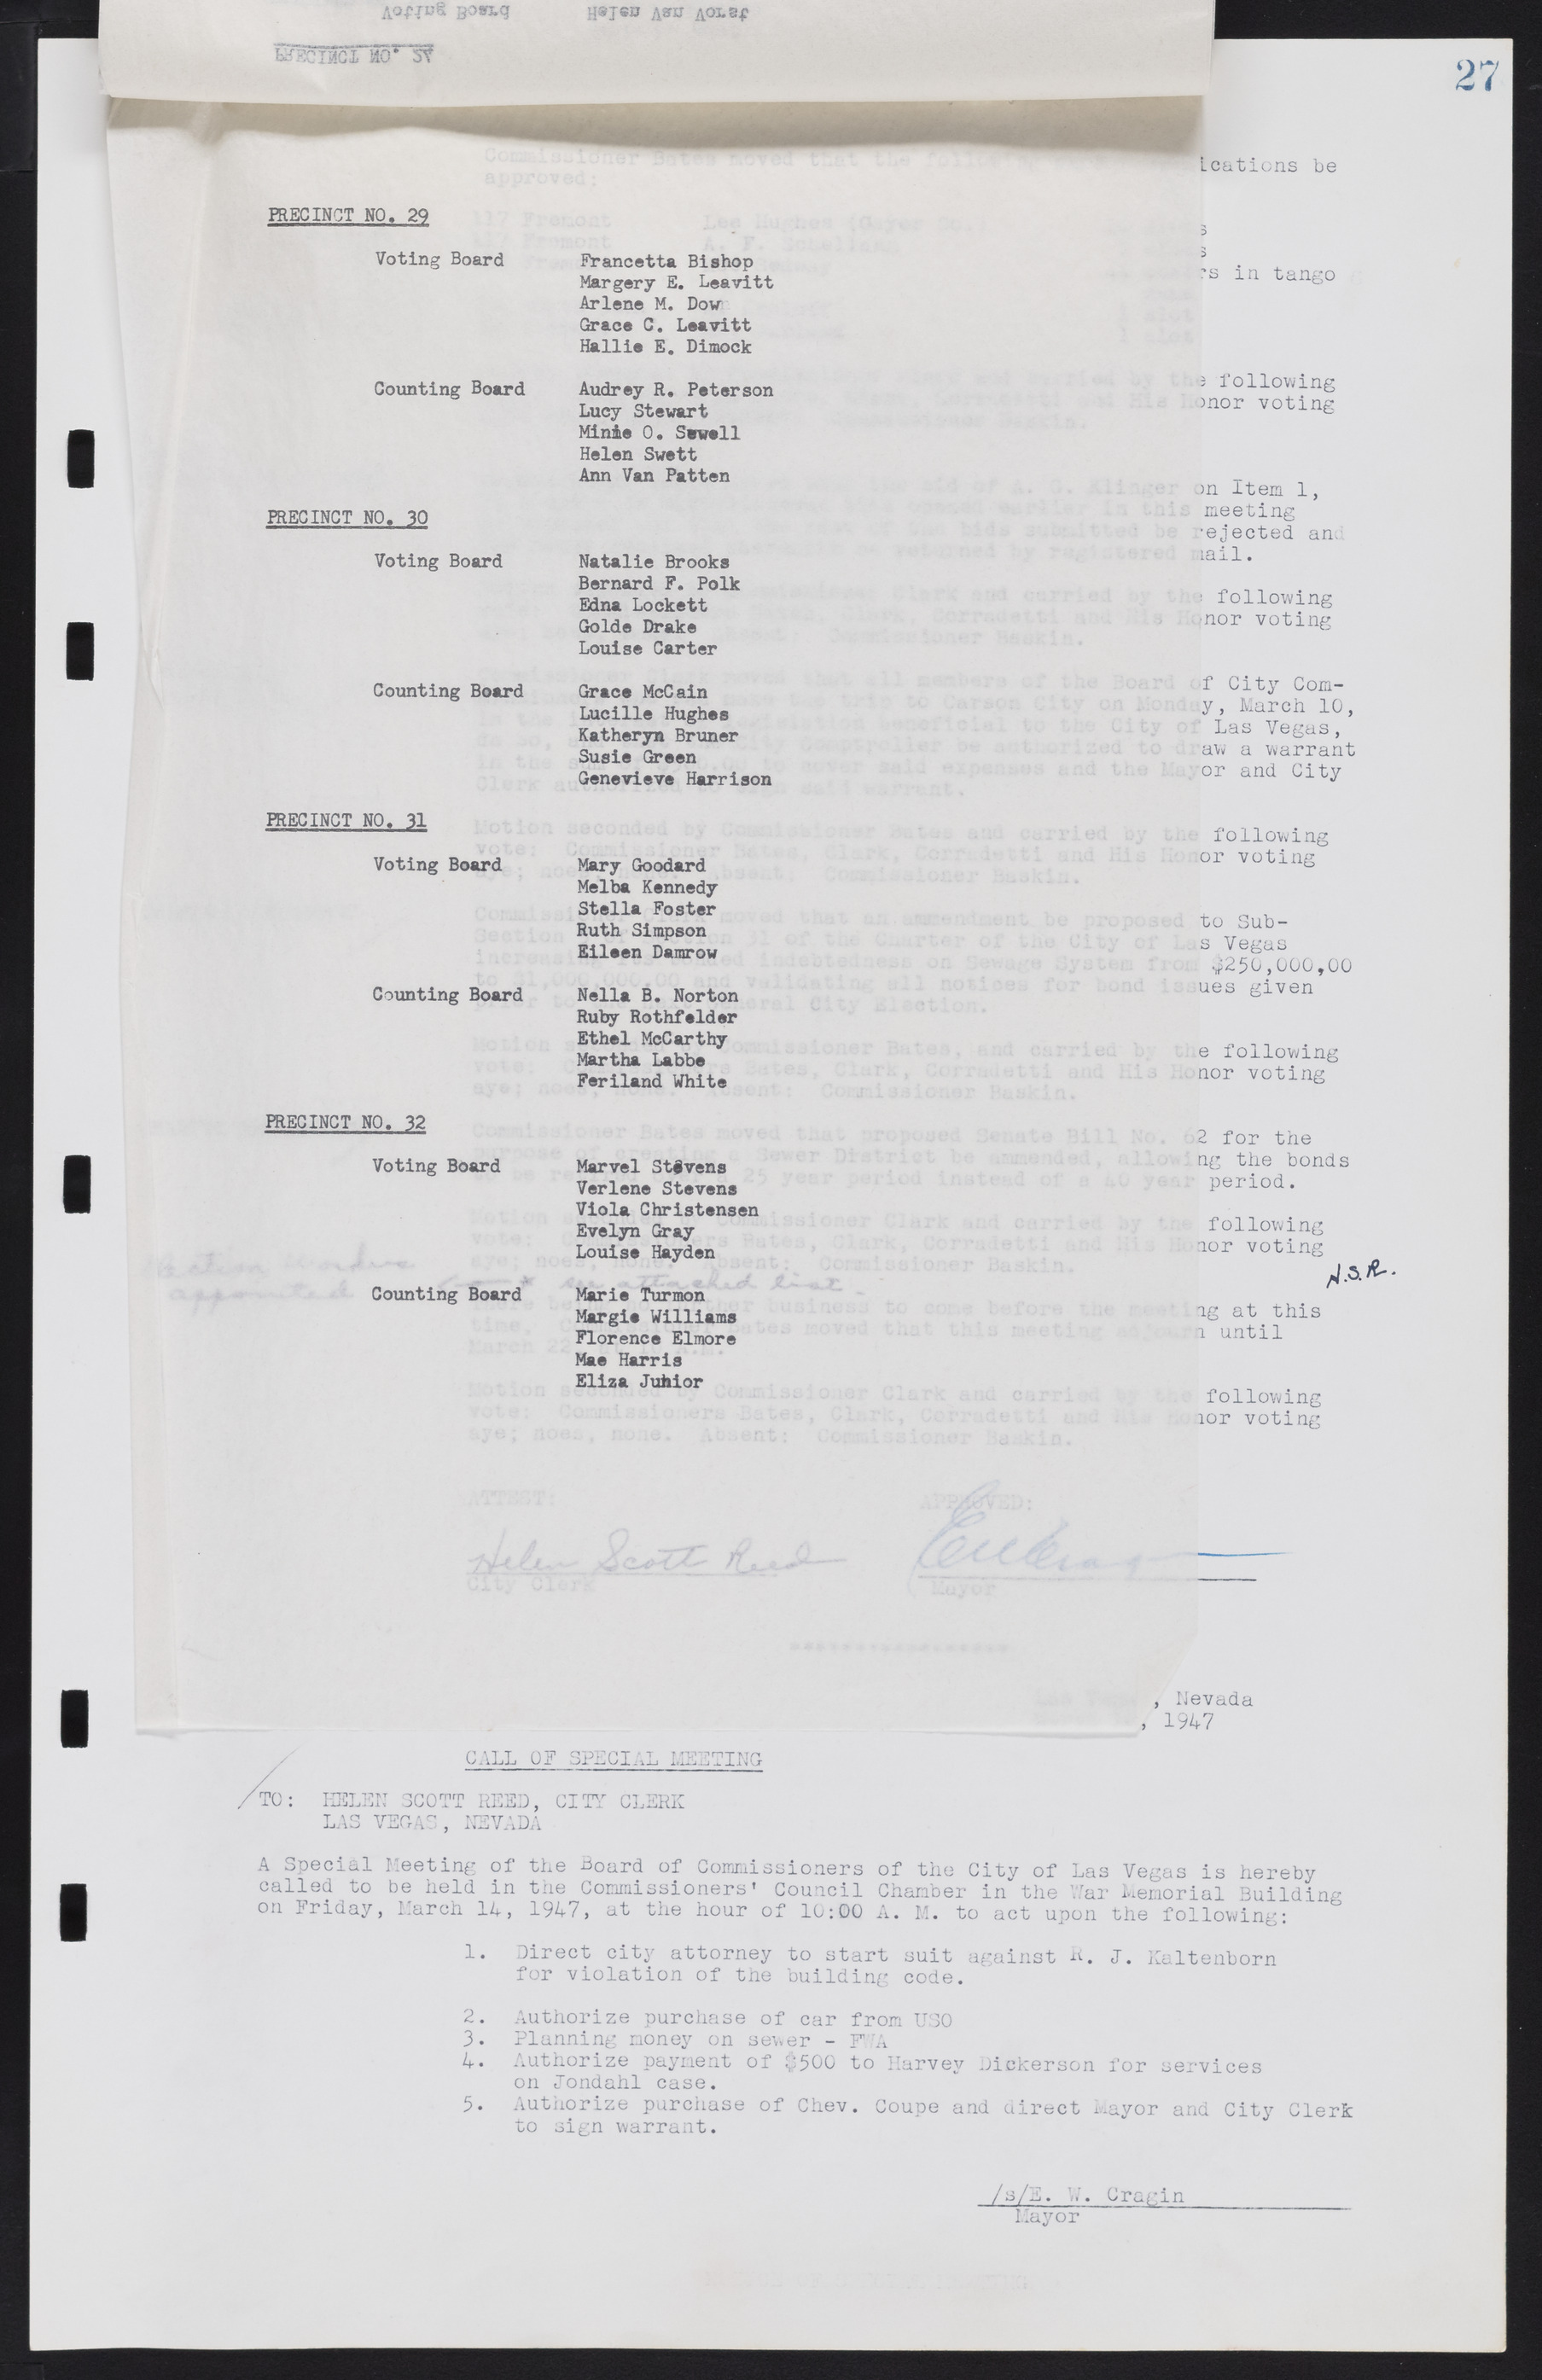 Las Vegas City Commission Minutes, January 7, 1947 to October 26, 1949, lvc000006-41